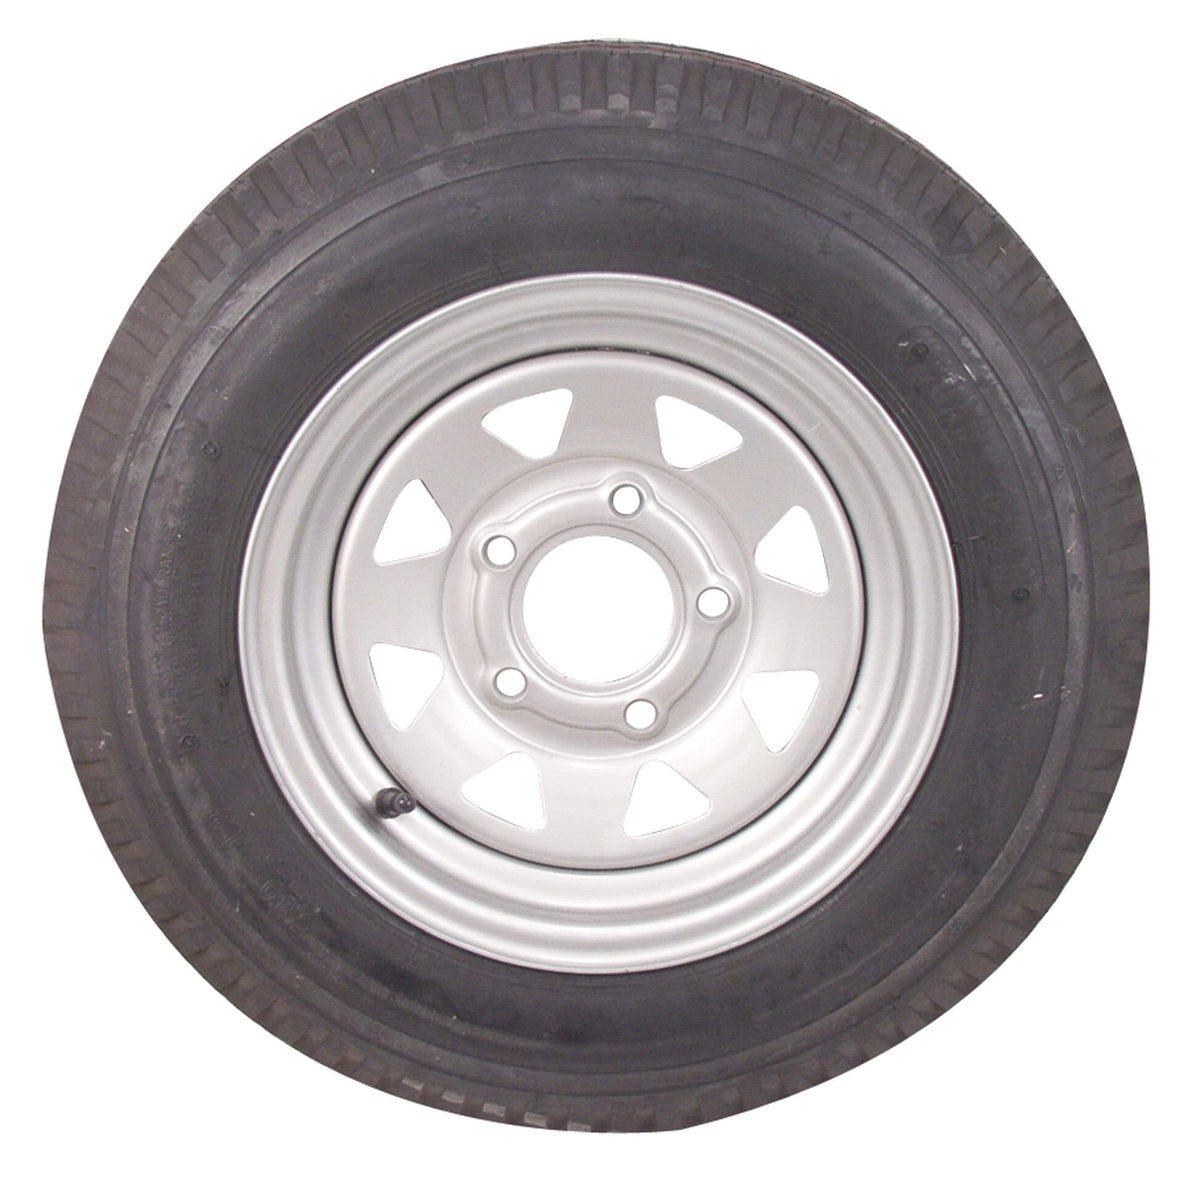 Americana Bias Tire/Wheel 5.30 12 C/5-Hole Silver Spoke #30818